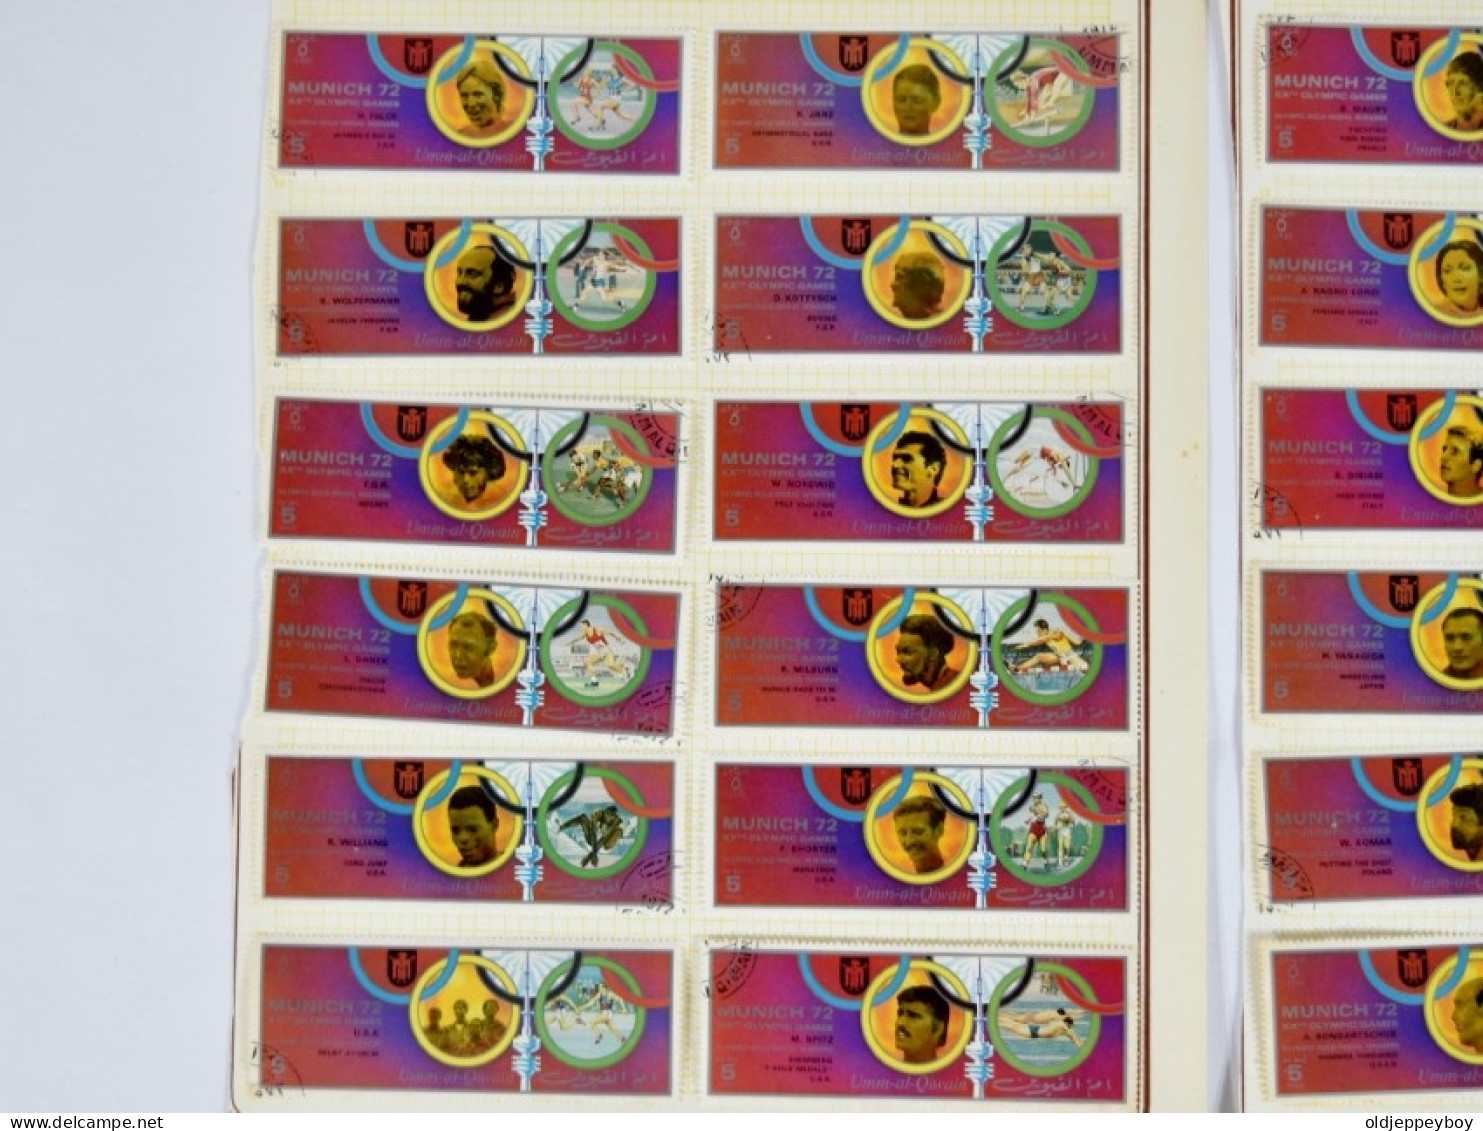 Lot De 30 Timbres/stamps  UMM AL QIWAIN 1972 - JUEGOS OLIMPICOS DE MUNICH 72 -  Complete Set Of 30 Stamps OLYMPIC GAMES - Ete 1972: Munich